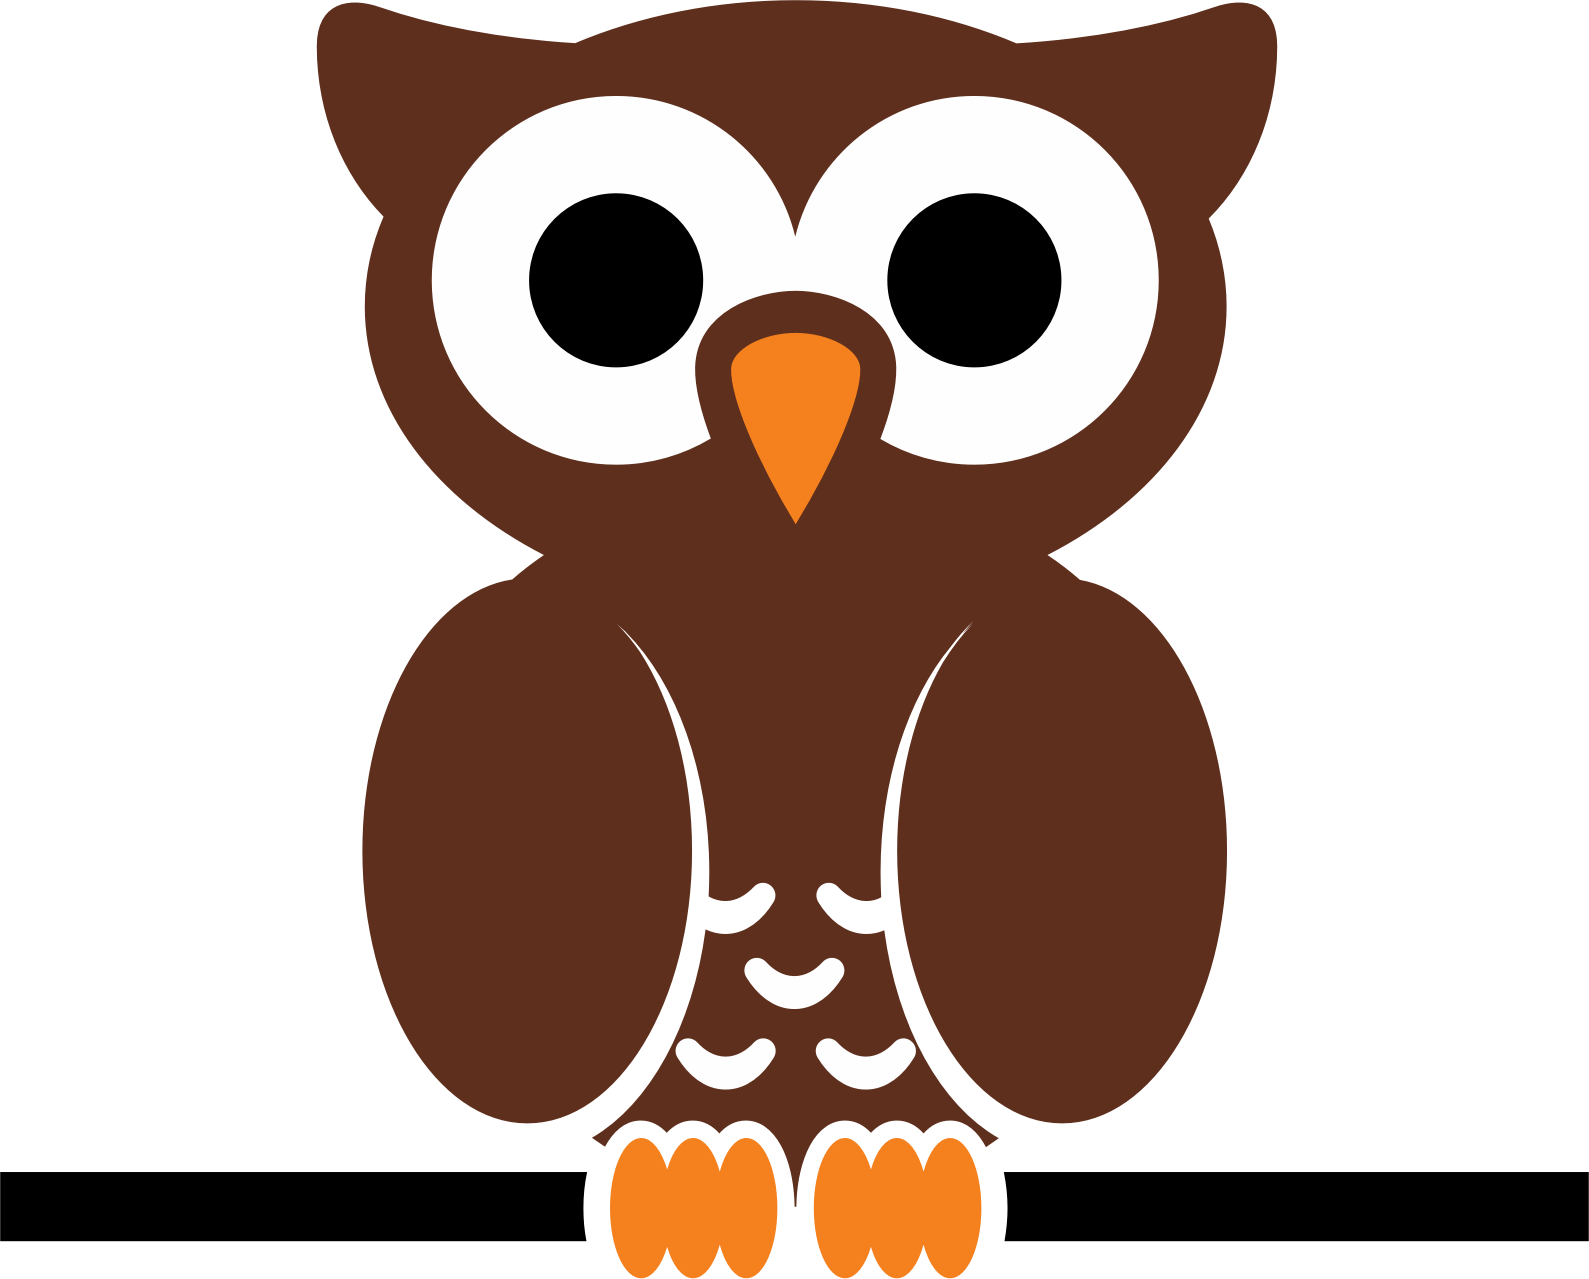 Owl clipart simple.